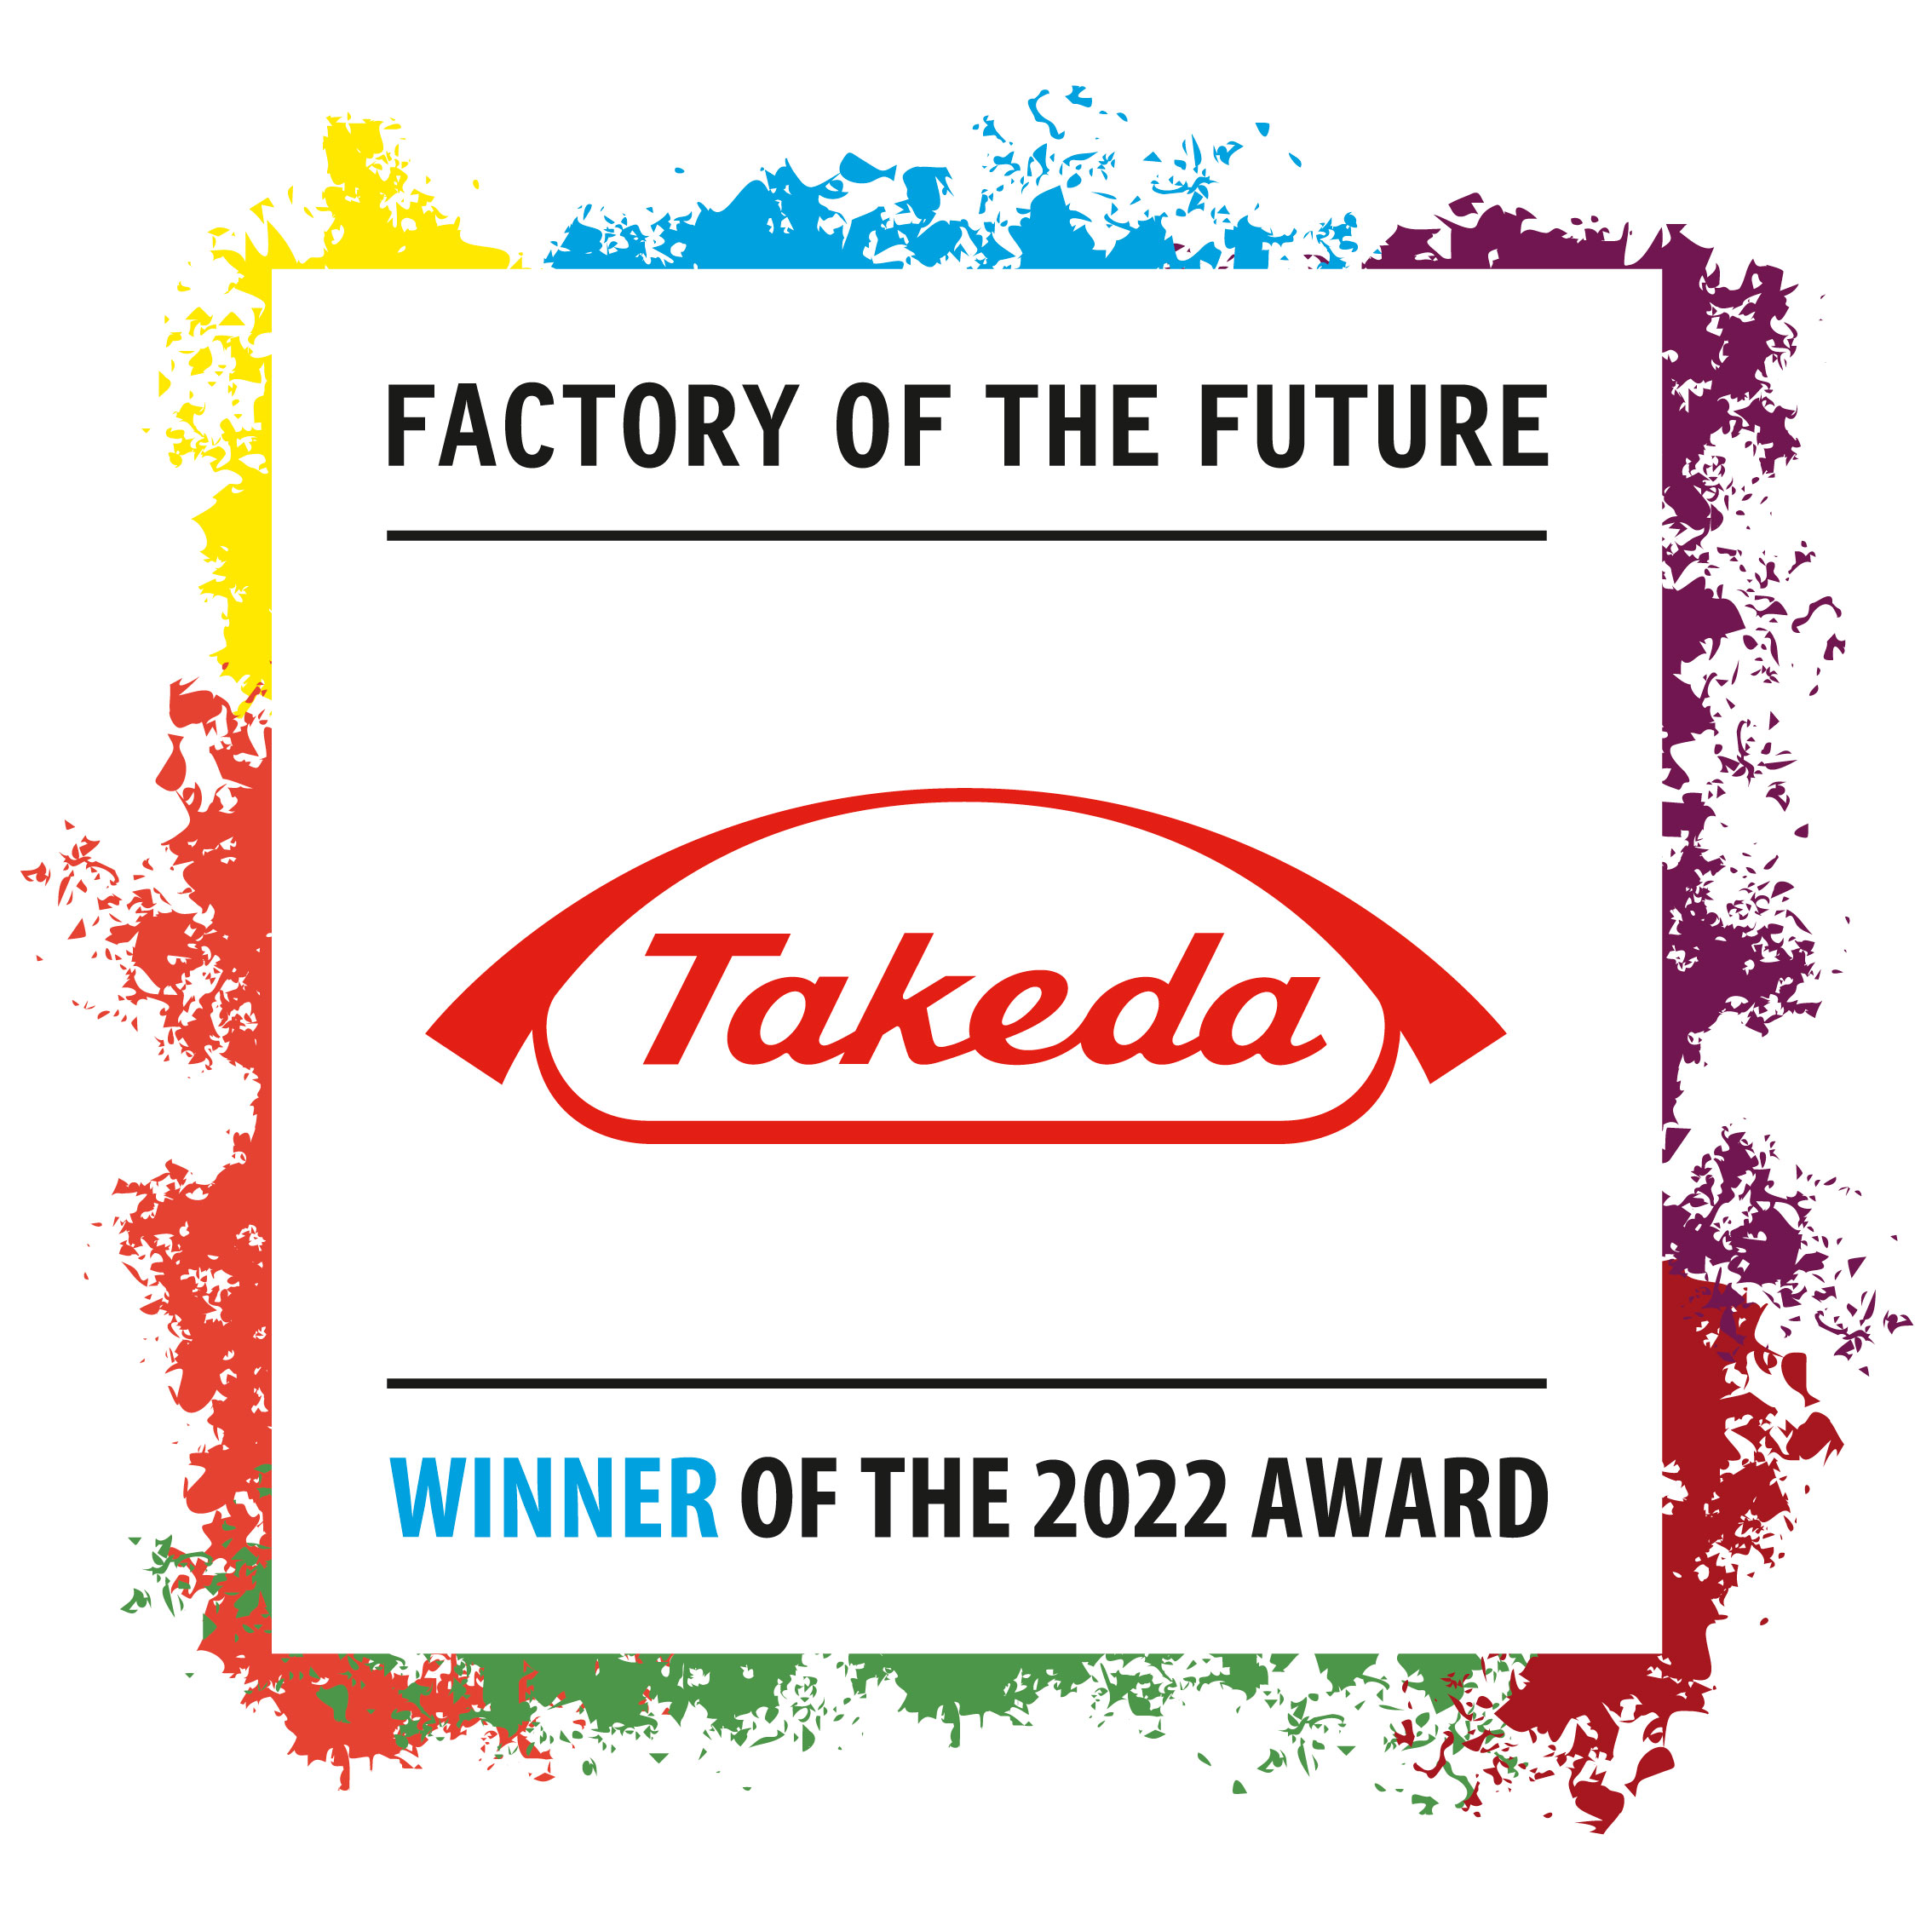 FOF_Award_2022_gagnants_takeda.jpg